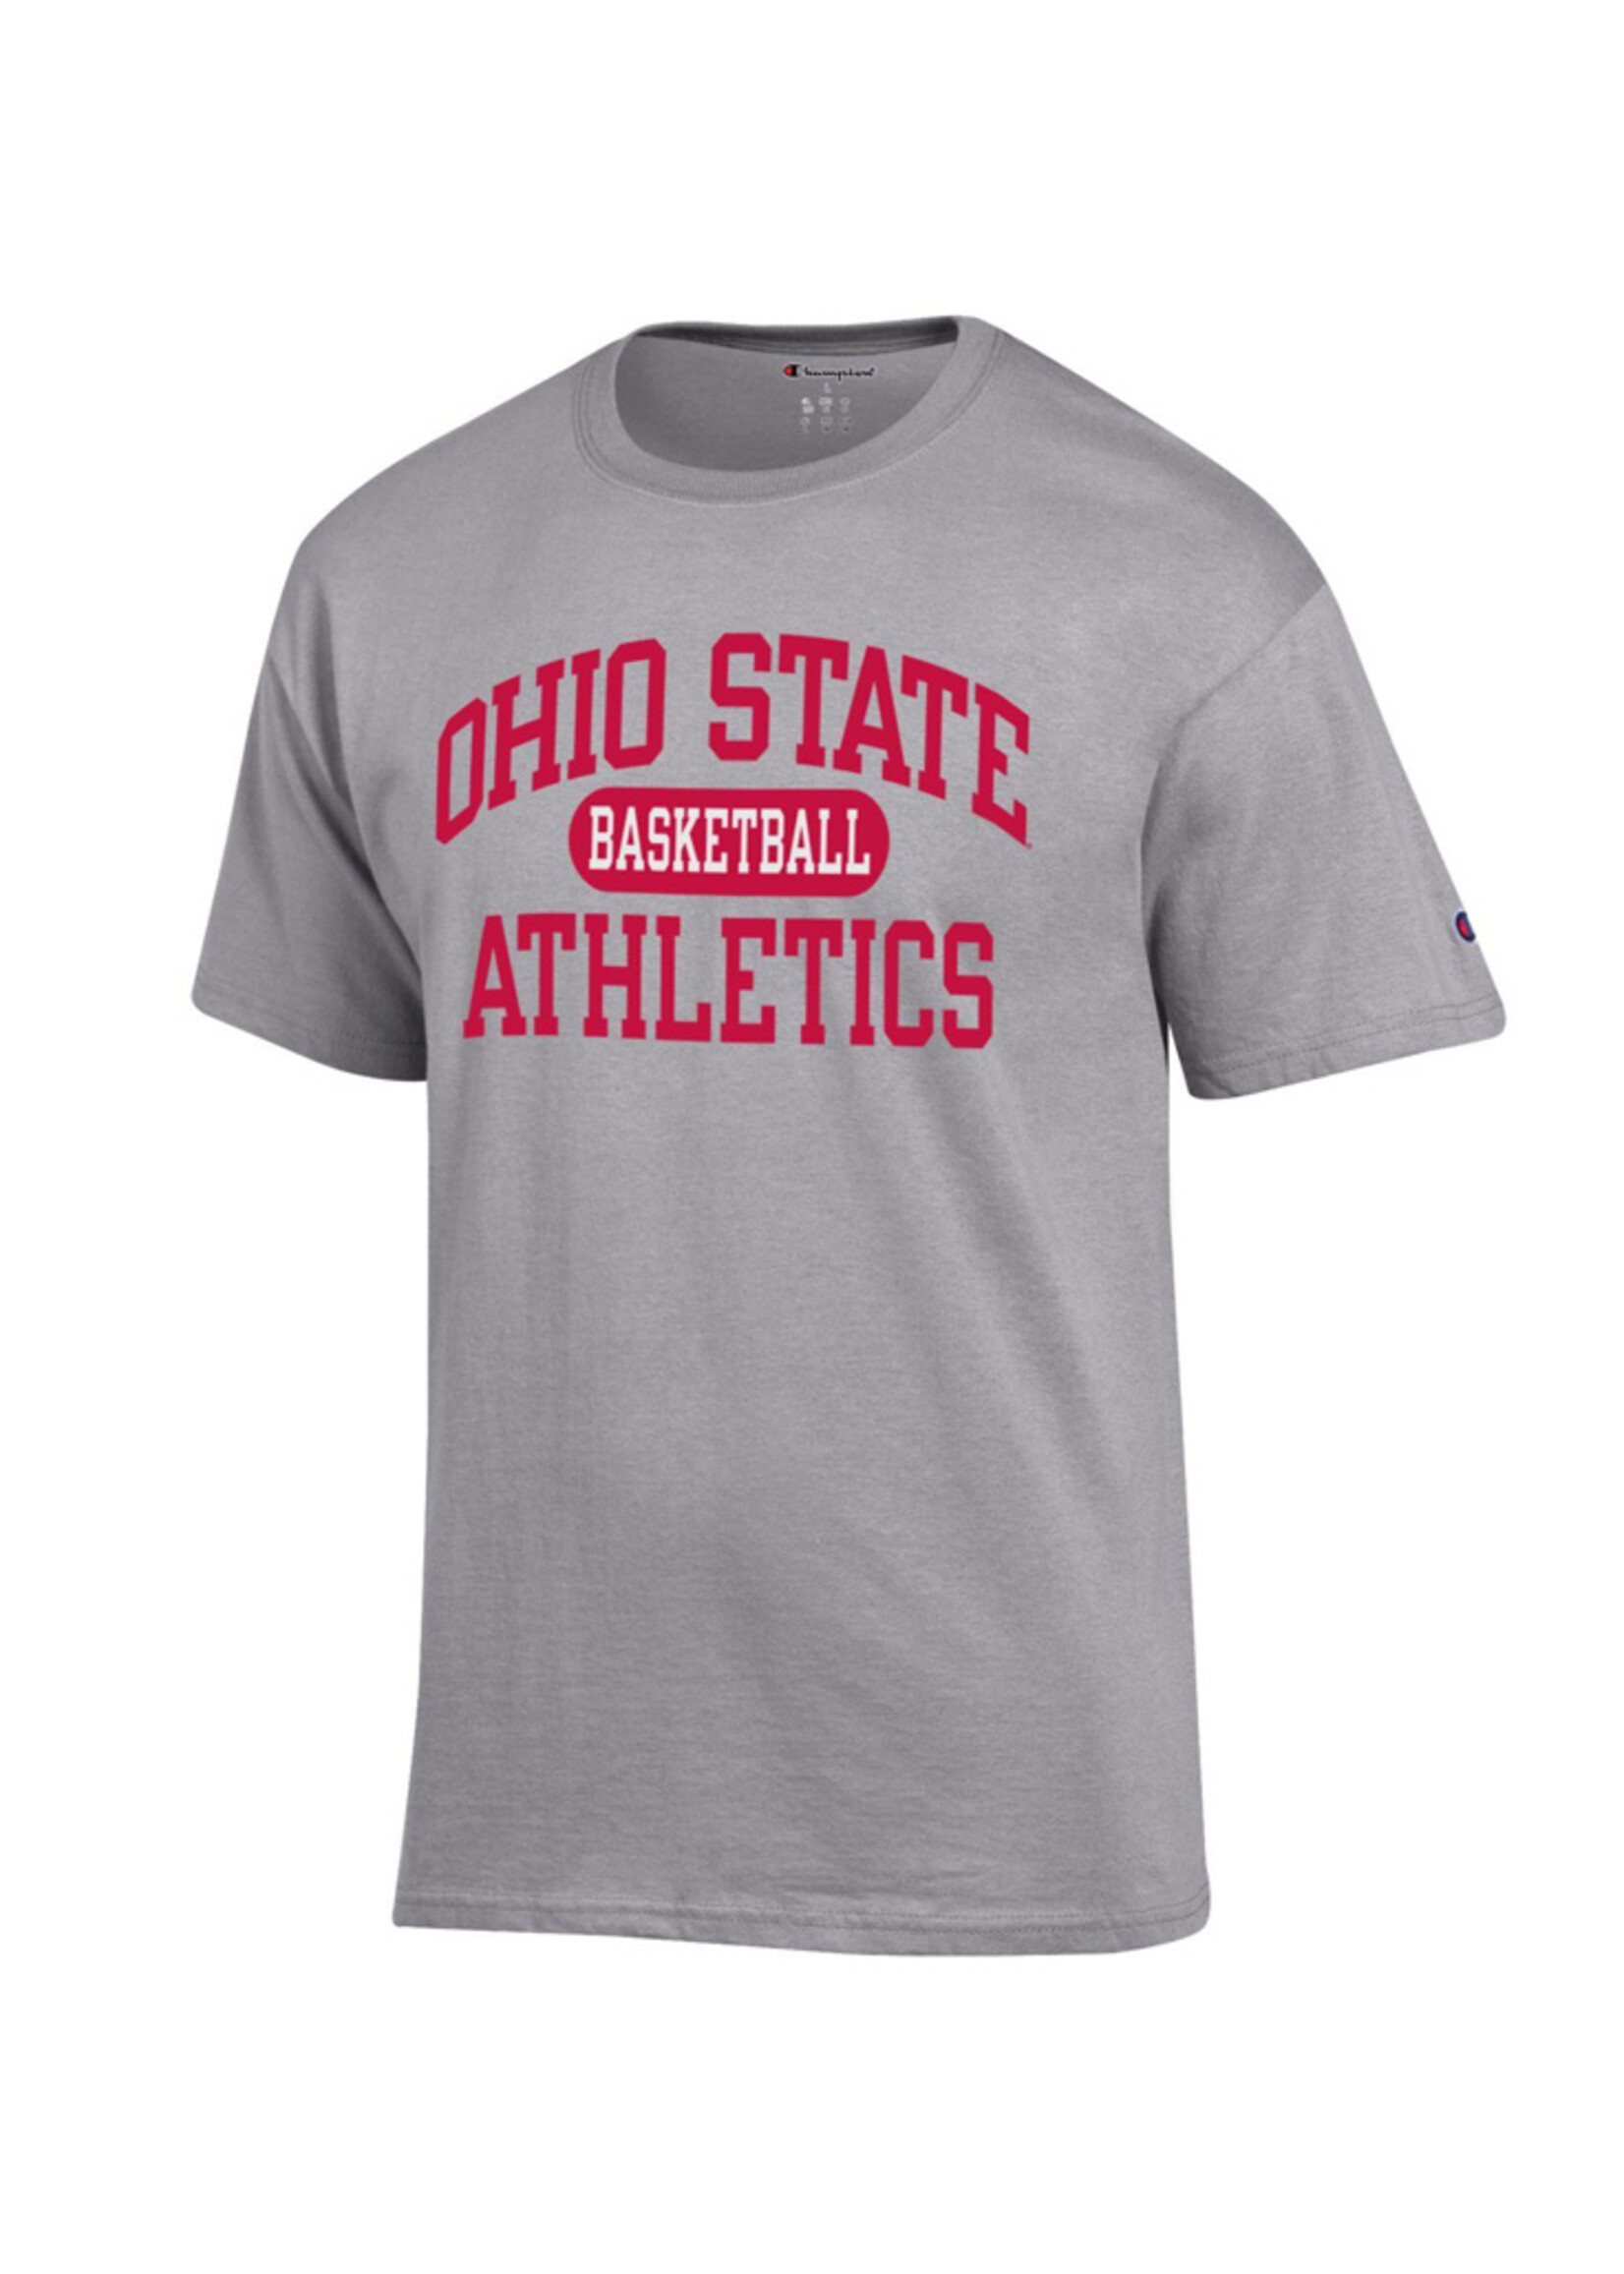 Ohio State Buckeyes Basketball T-Shirt